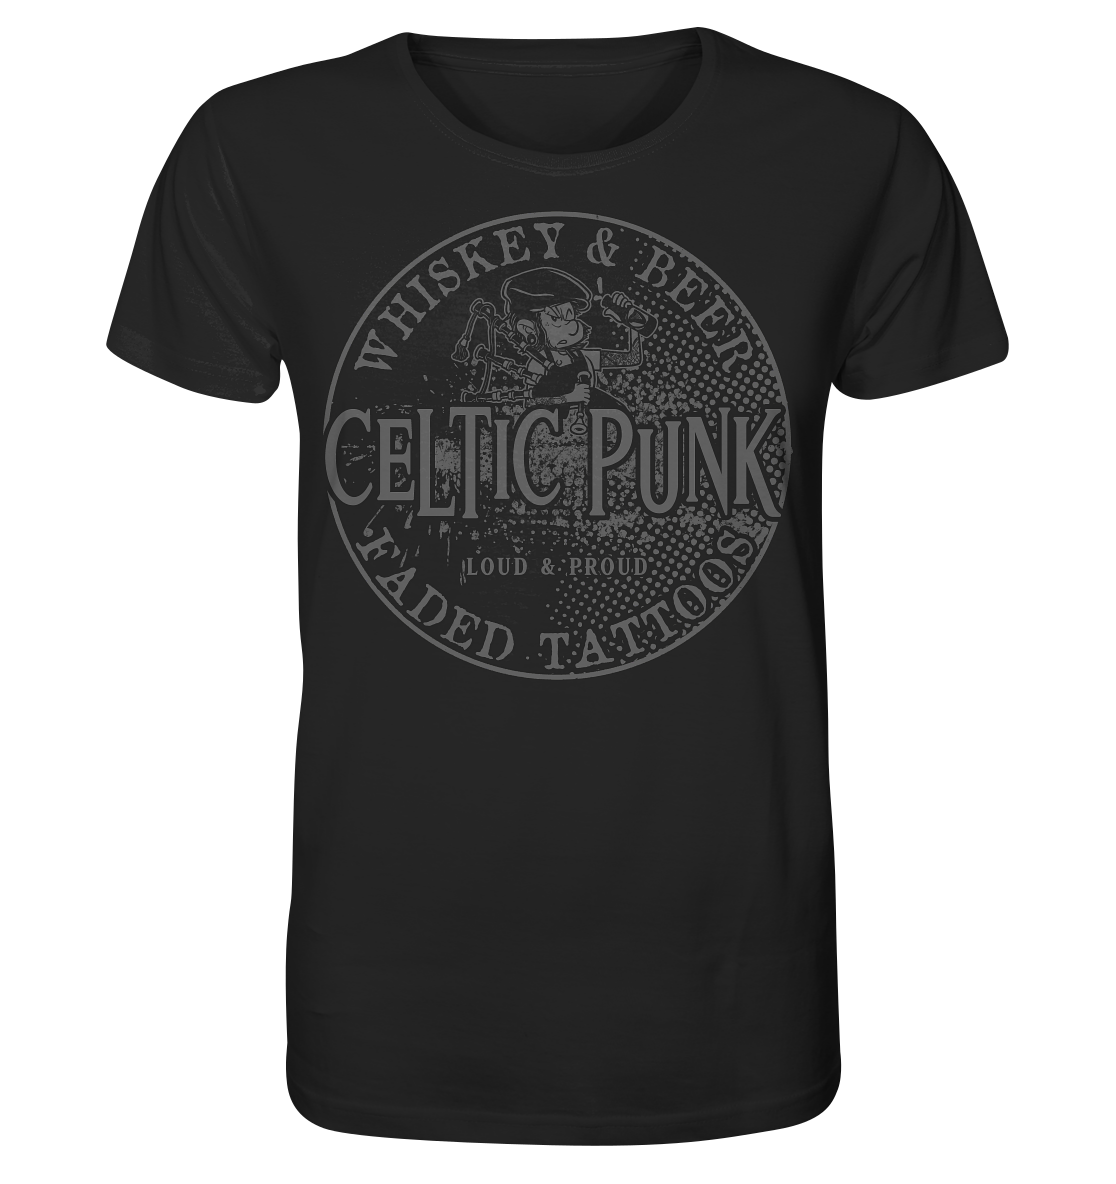 Celtic Punk "Whiskey, Beer & Faded Tattoos" - Organic Shirt